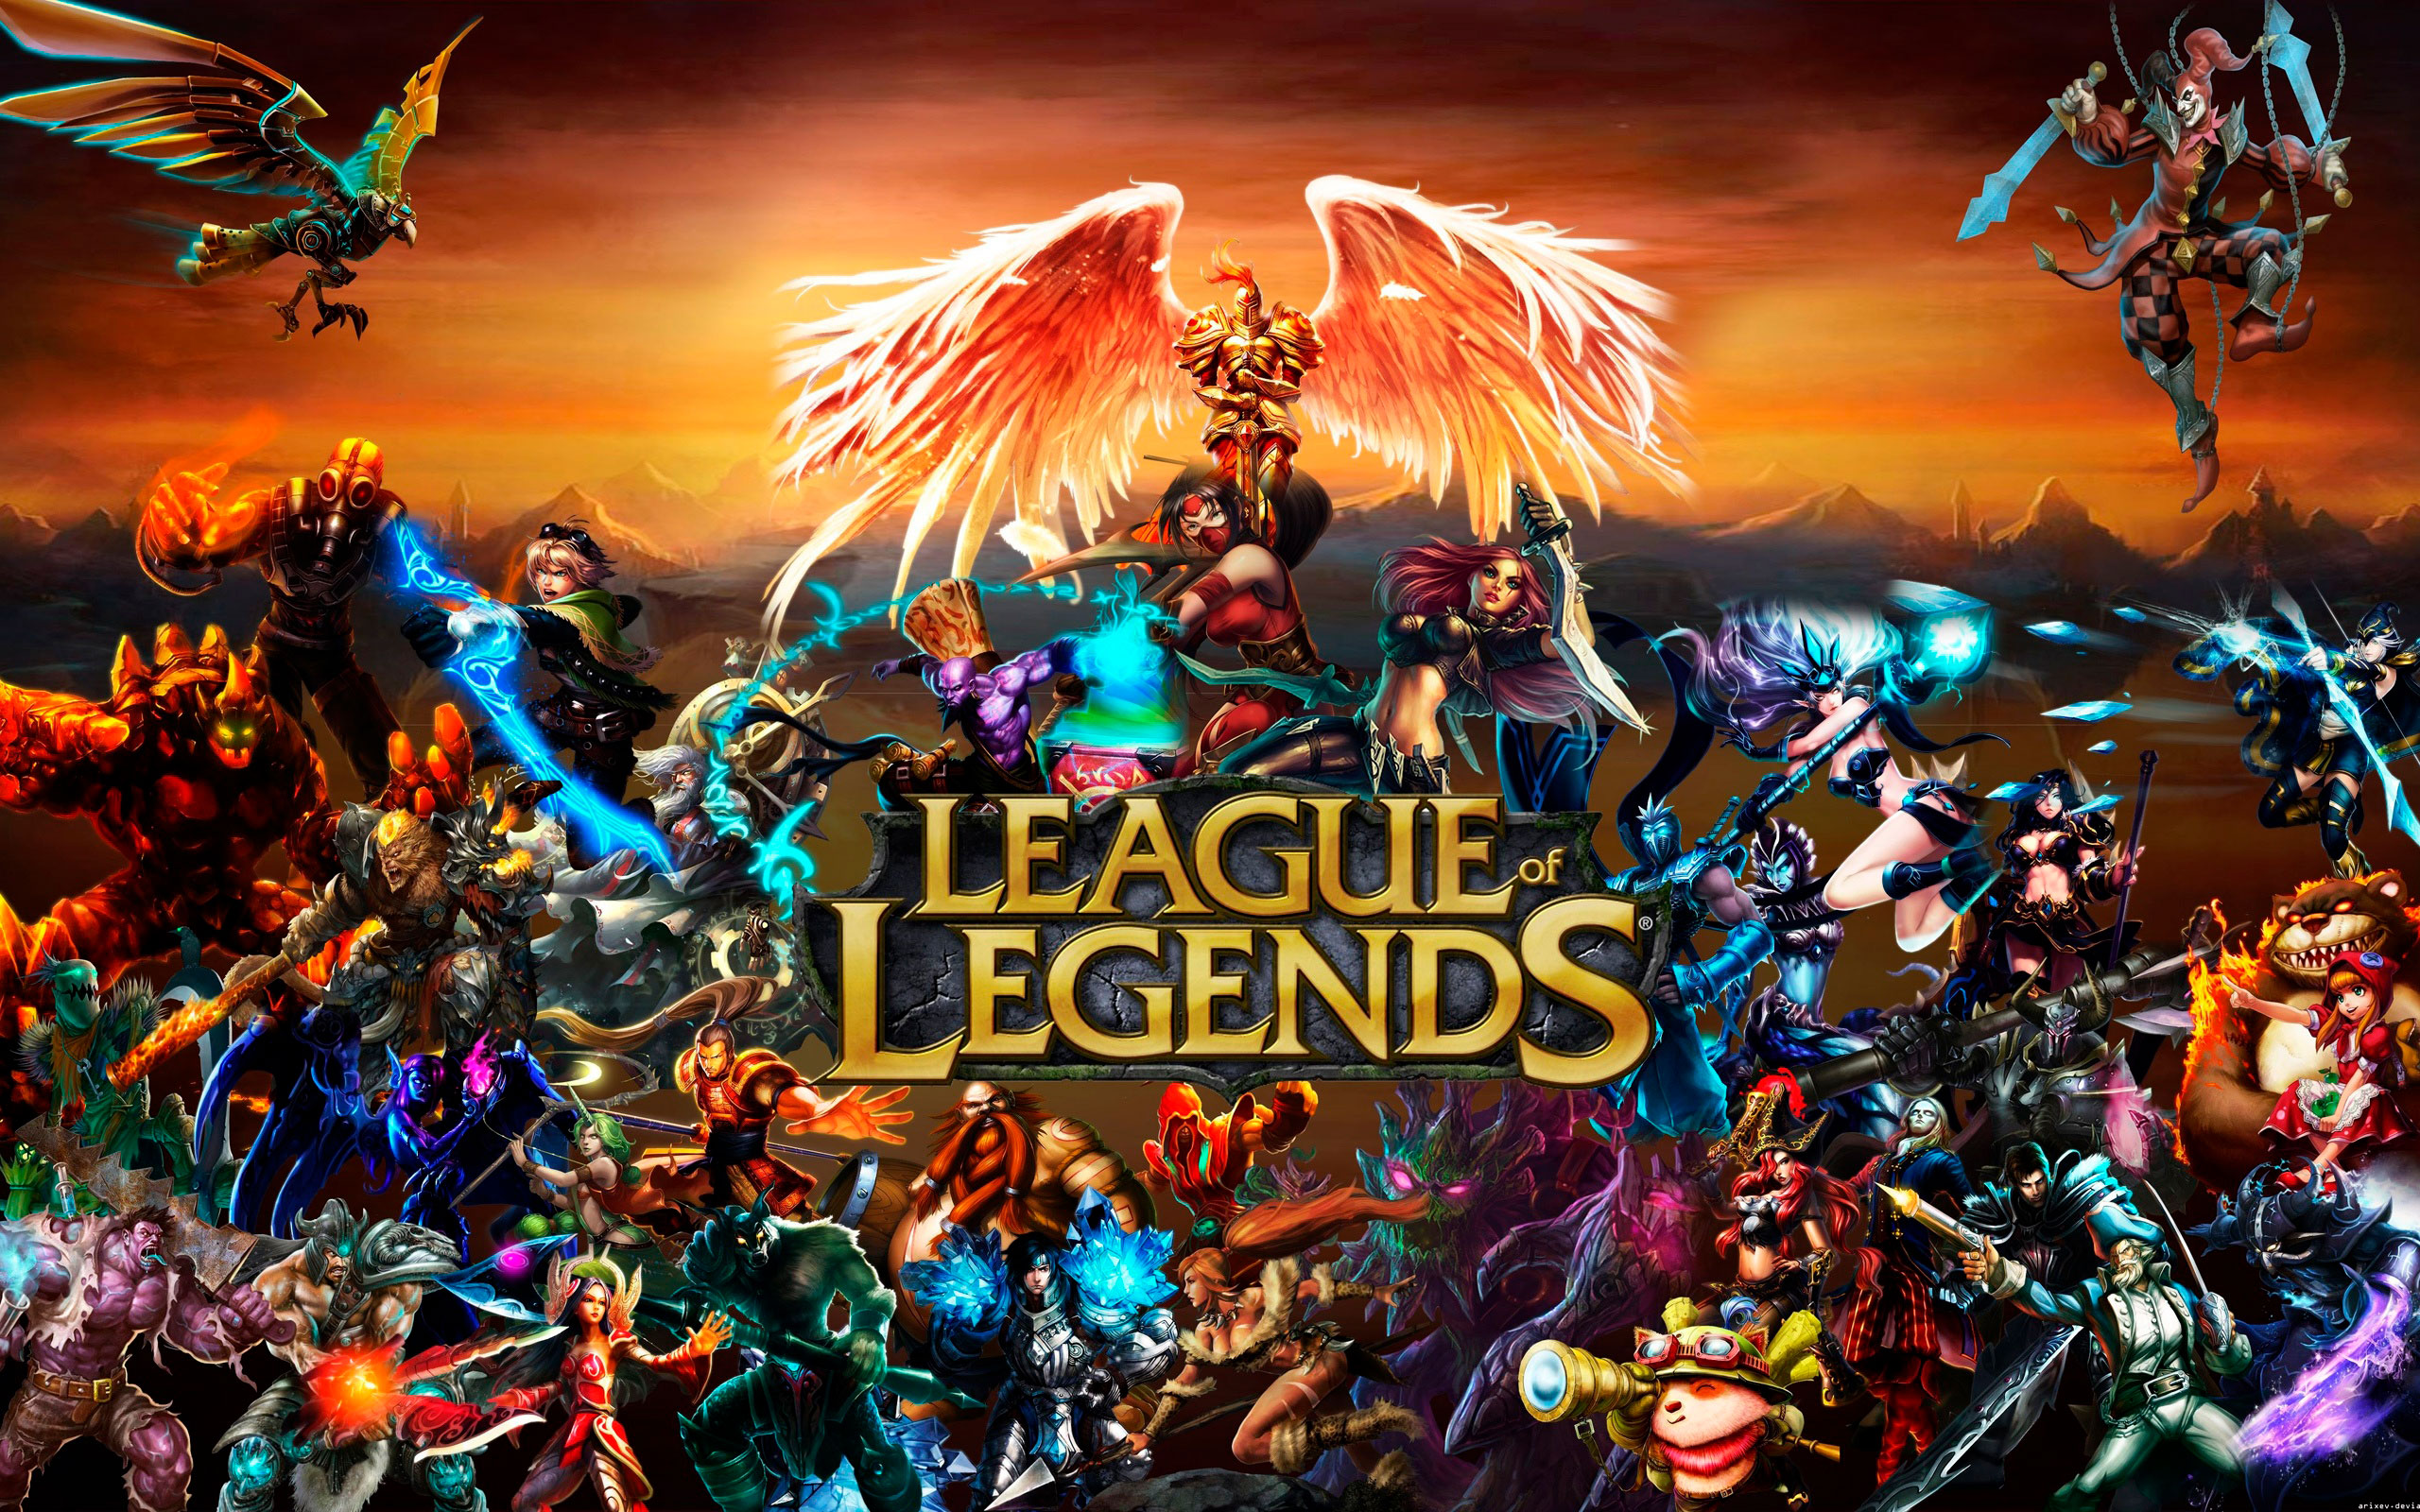 Análise de Campeão: Milio - League of Legends